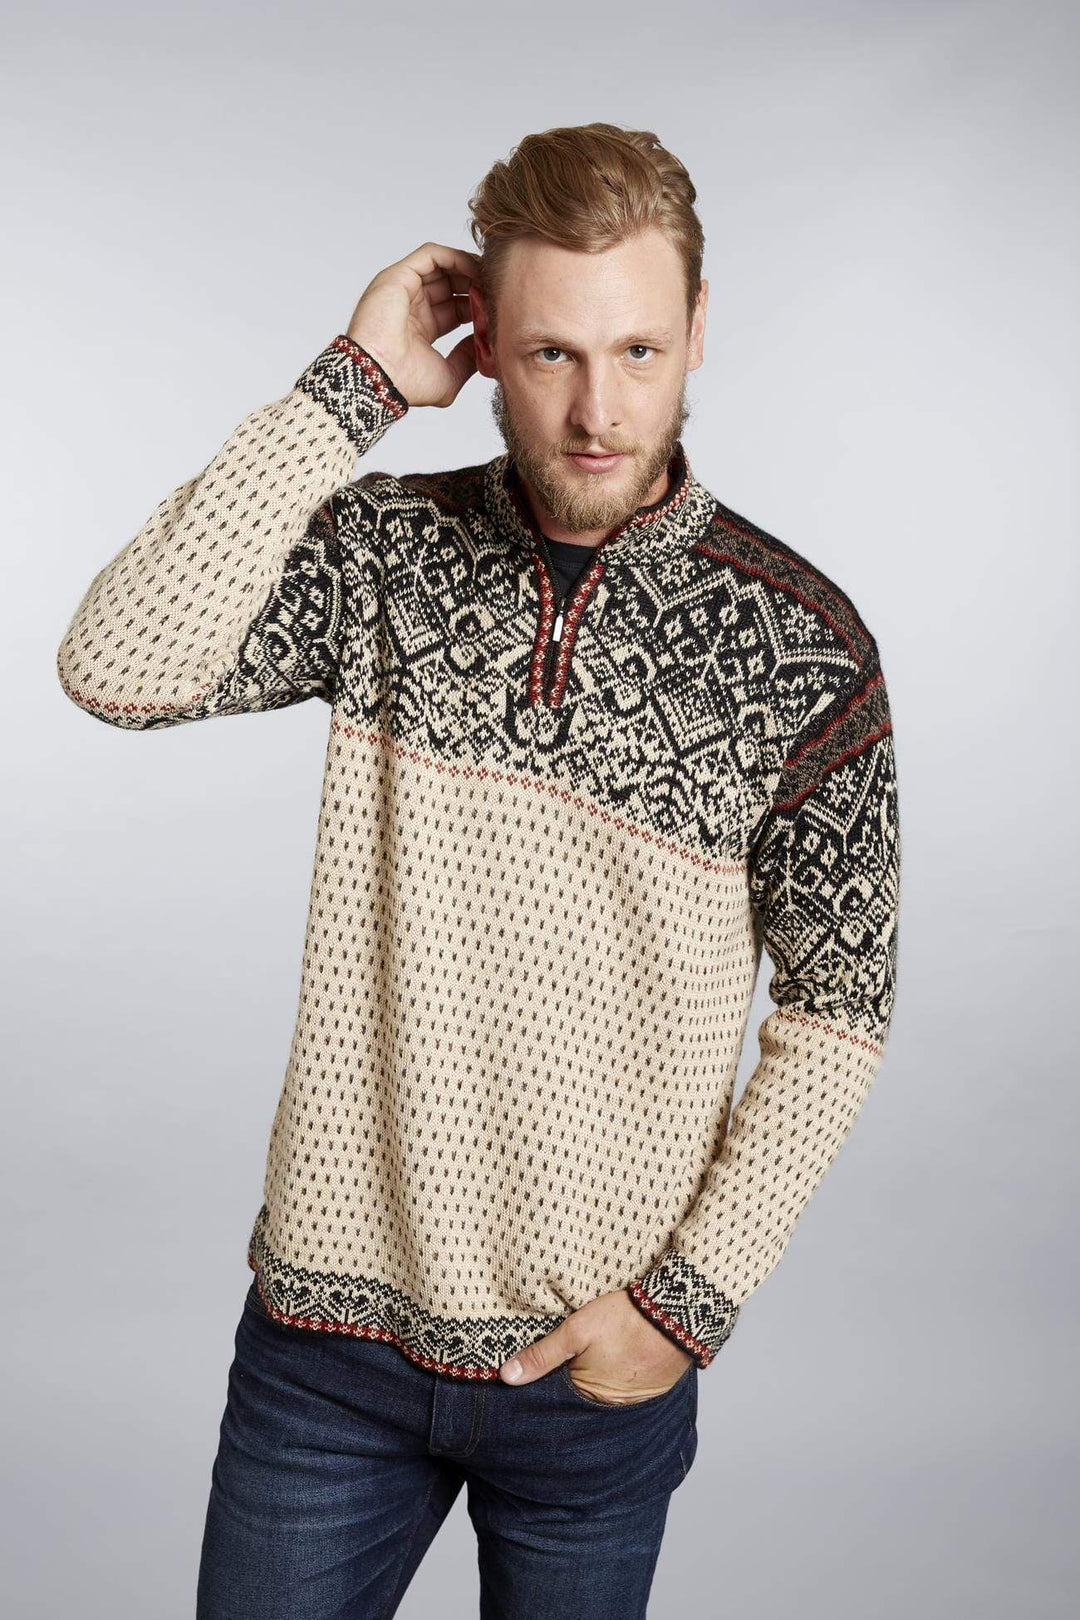 INTI ALPACA Thick Handmade sweater for Men in Blue Alpaca Wool - Winter  Crewneck Pullover - Chunky Knit Sweater